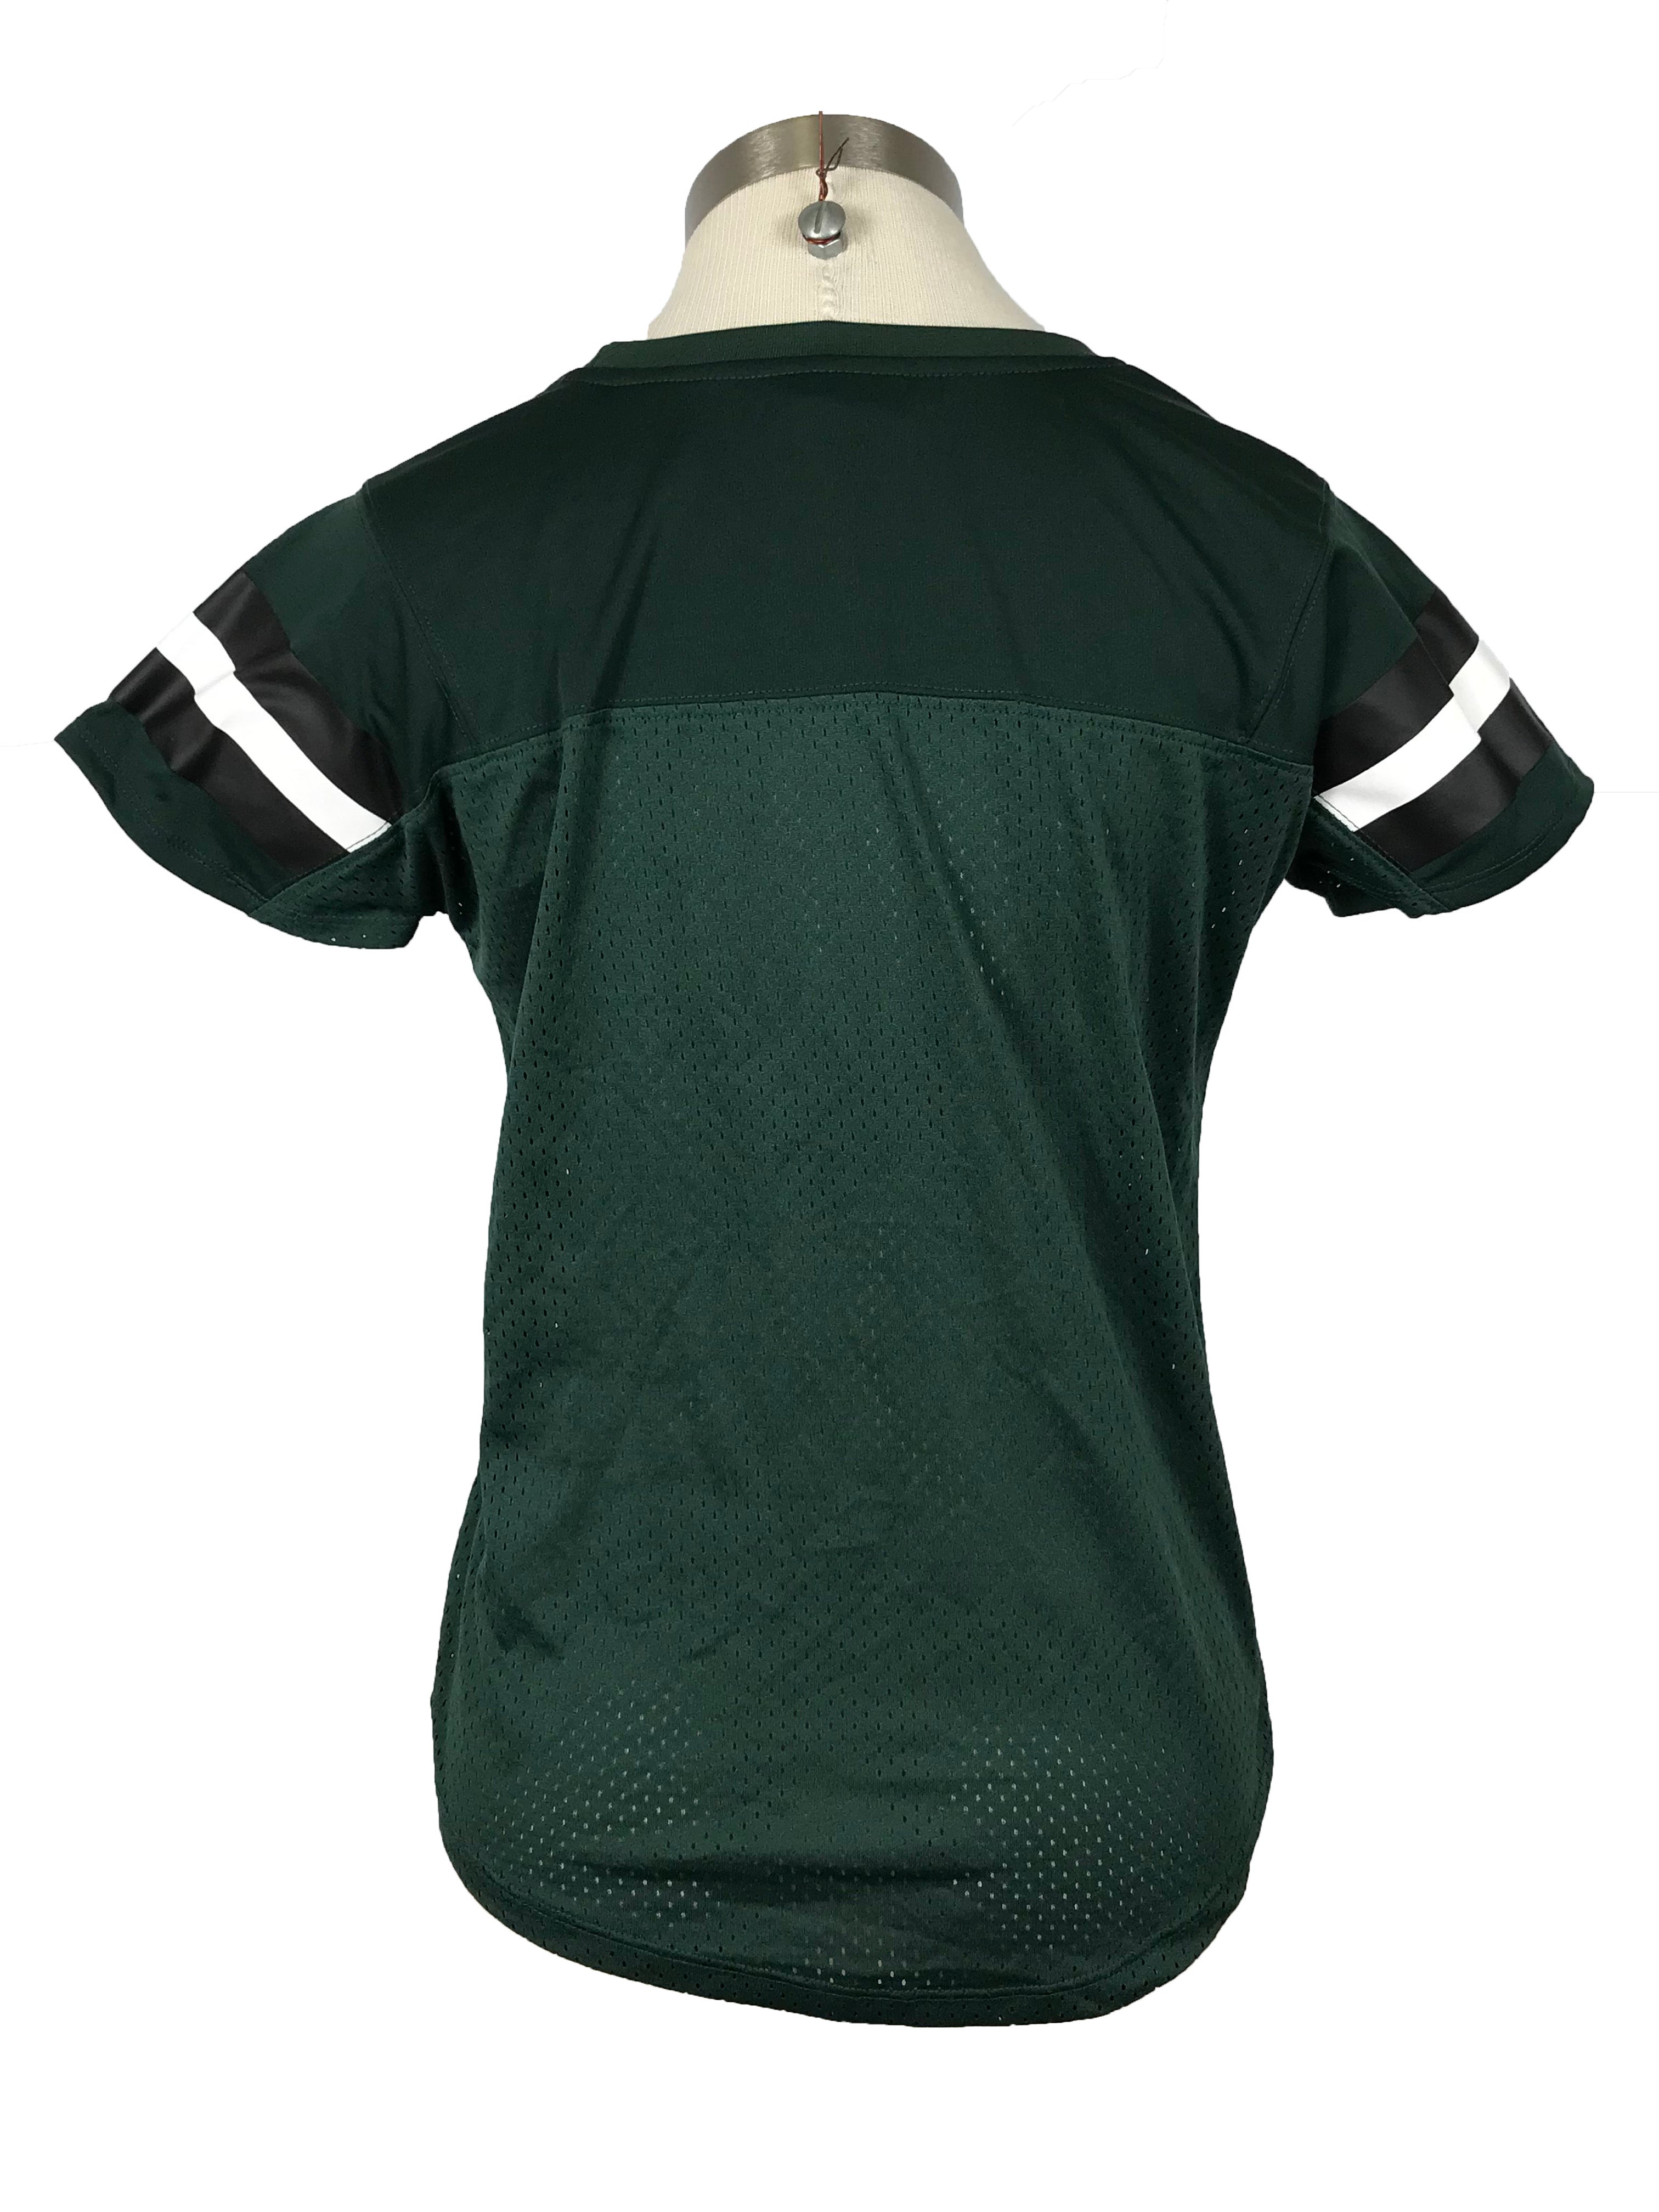 MSU Green Jersey T-Shirt Women's Size S